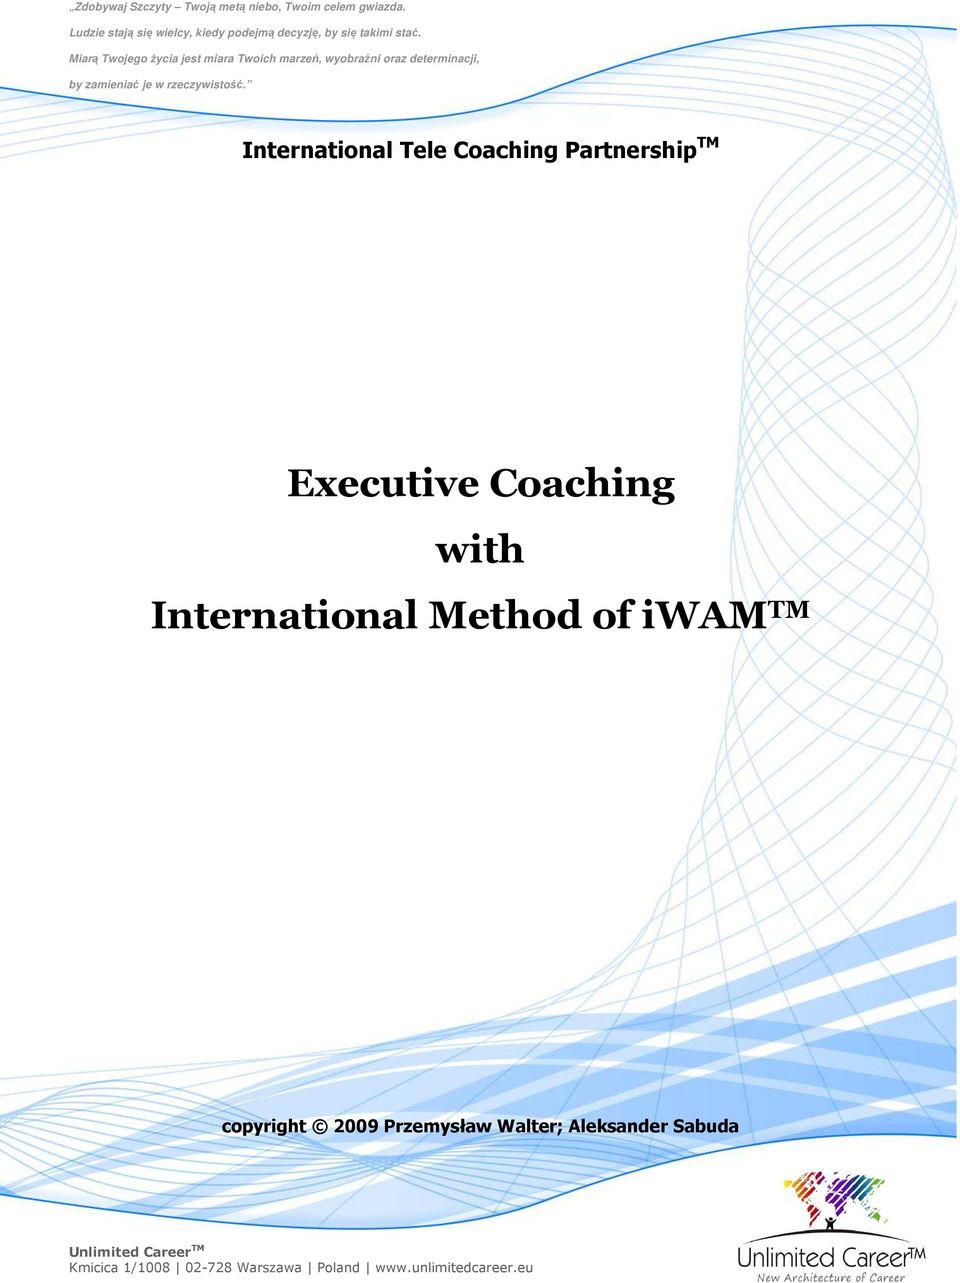 with International Method of iwam TM